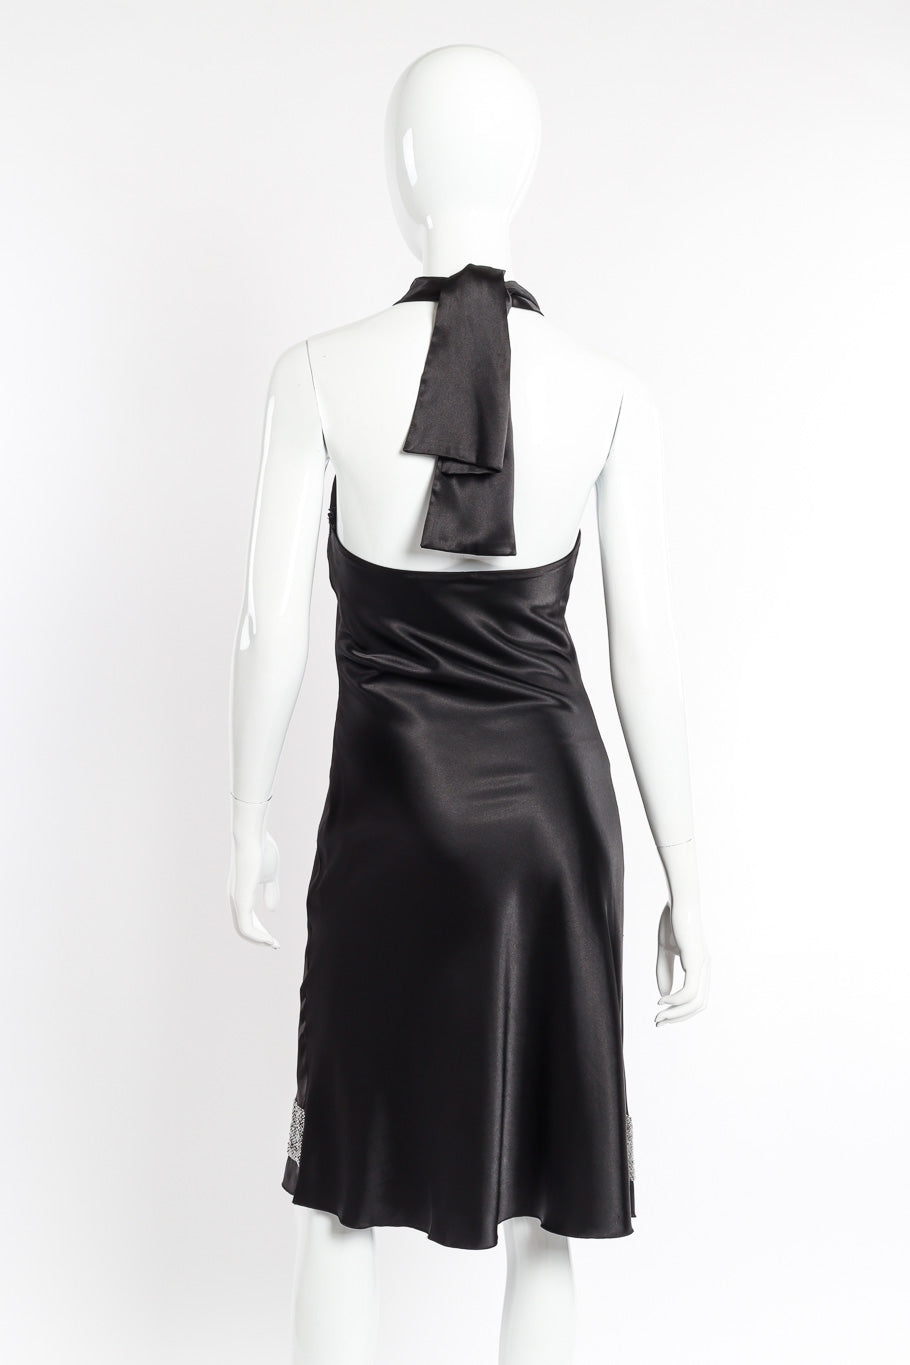 Christian Dior Silk Beaded Halter Dress back view on mannequin @recessla